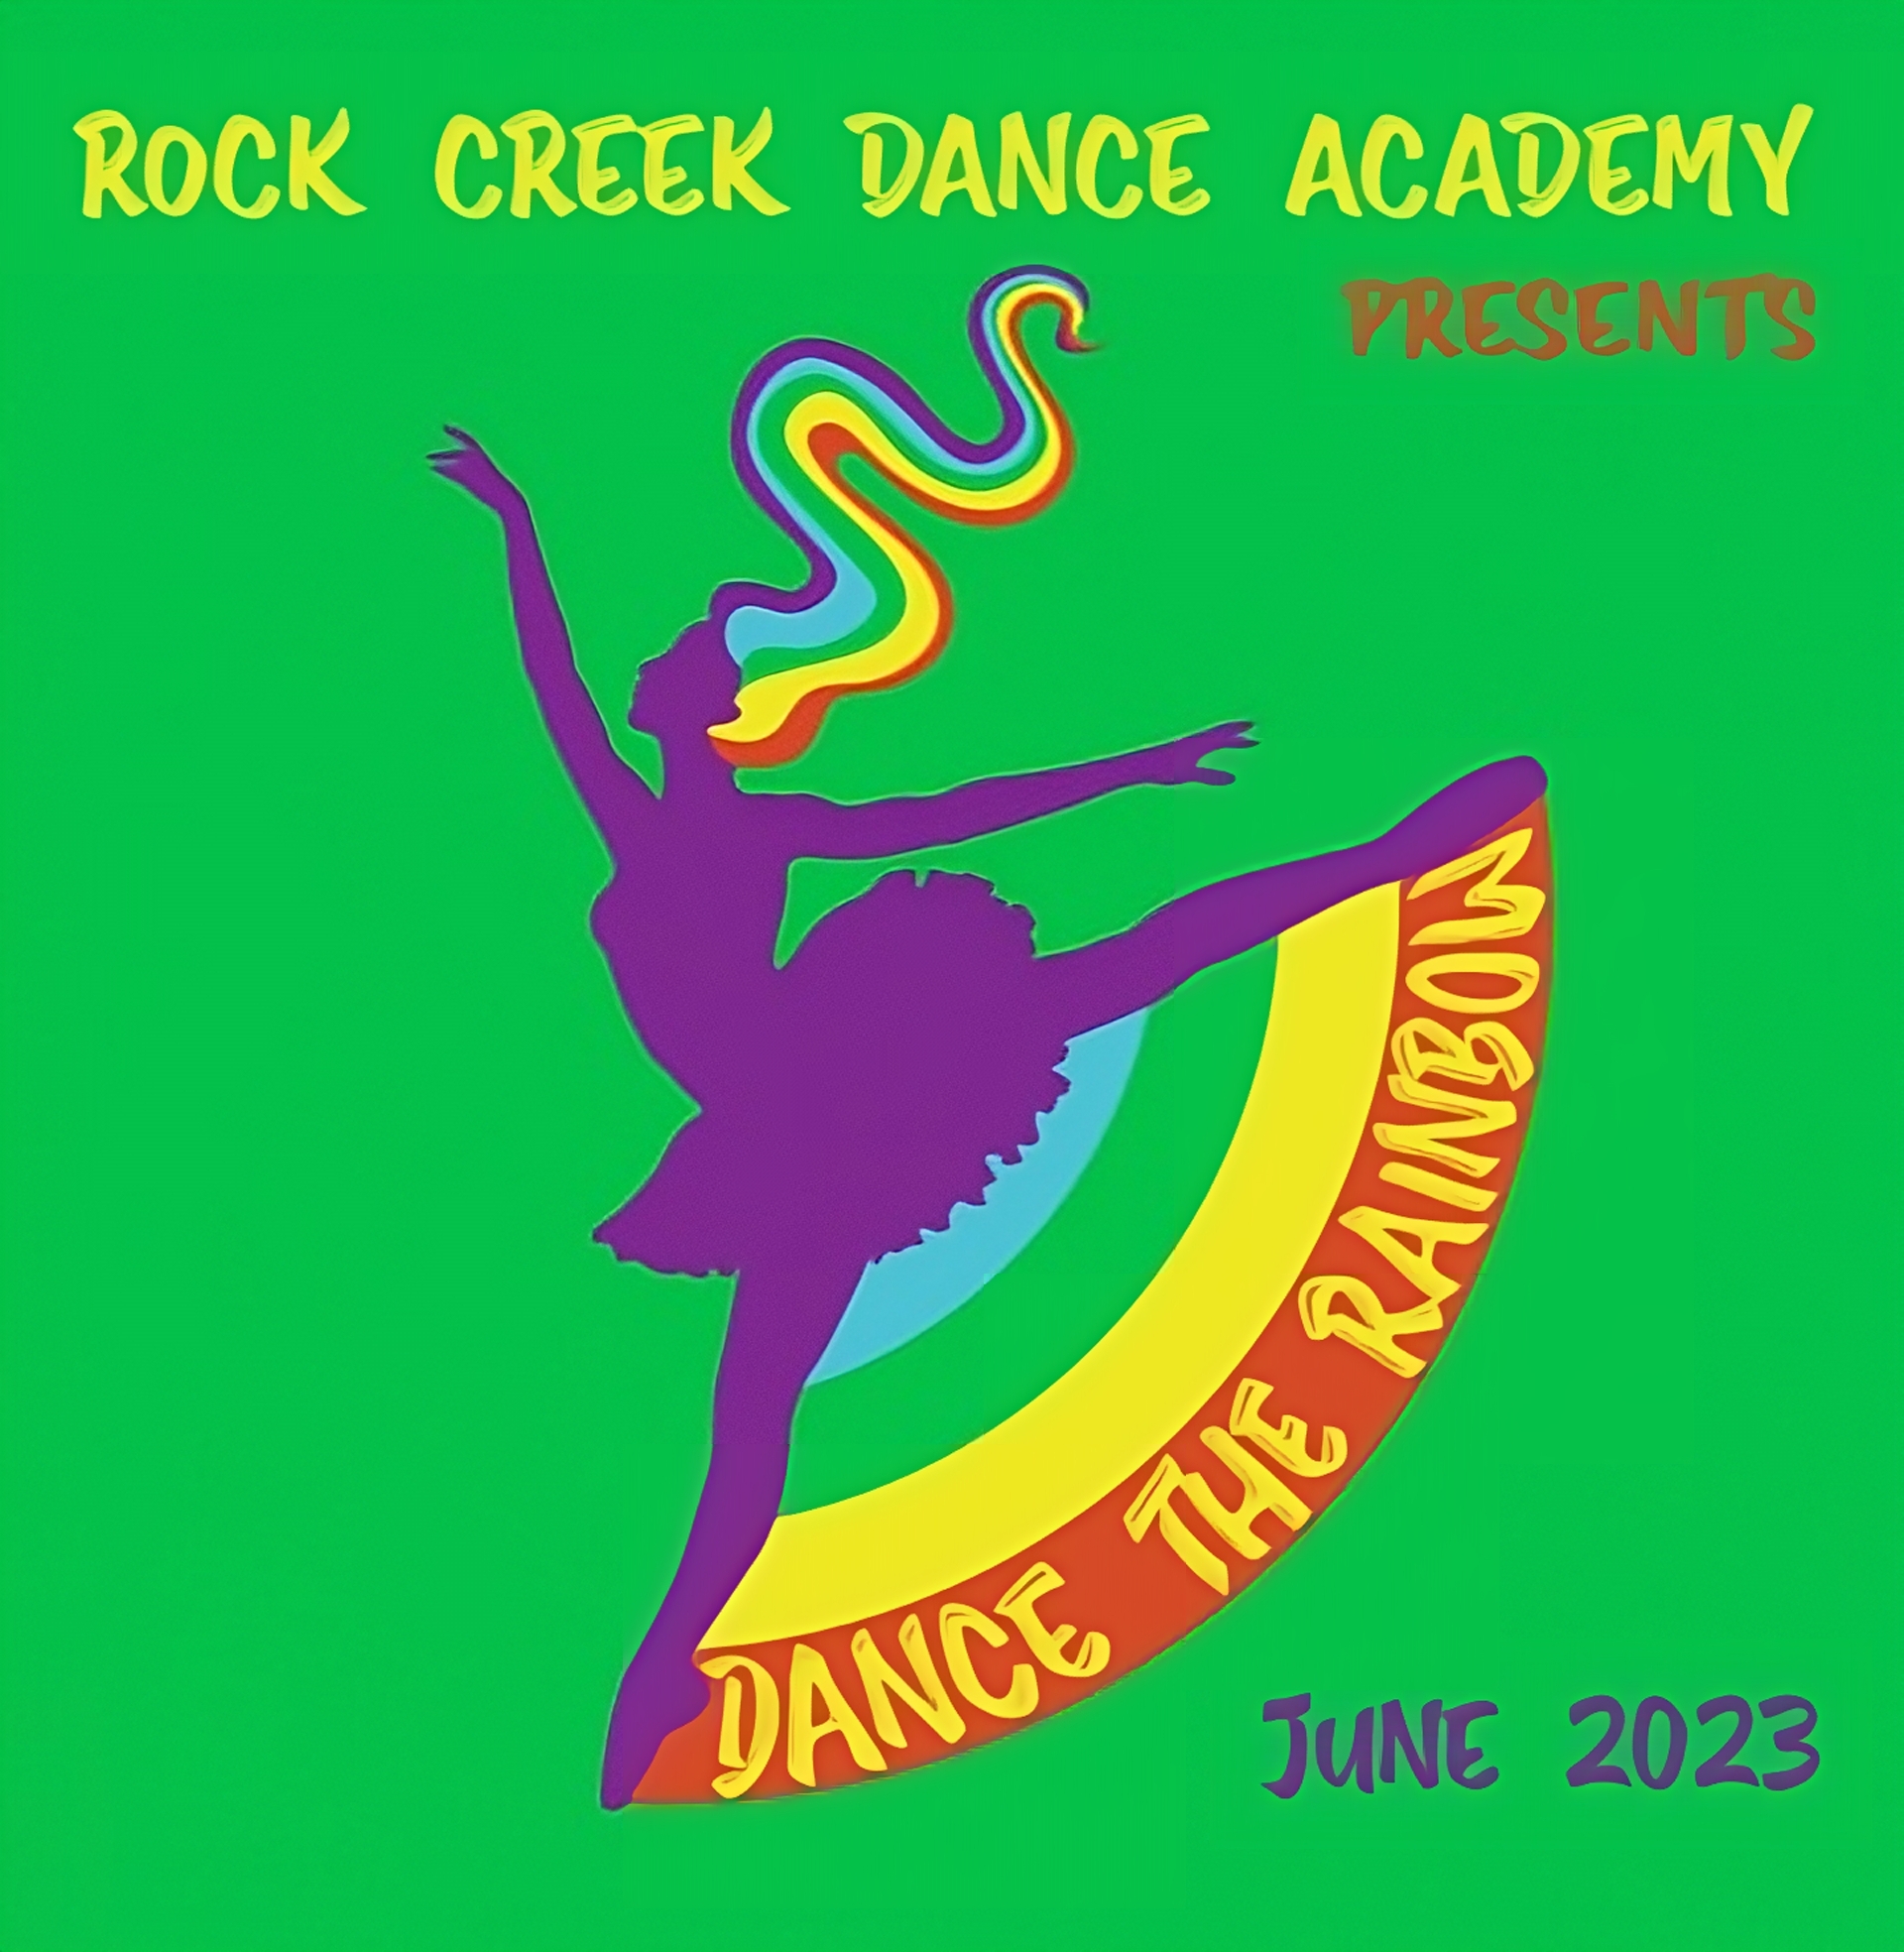 Rock Creek Dance Academy flyer